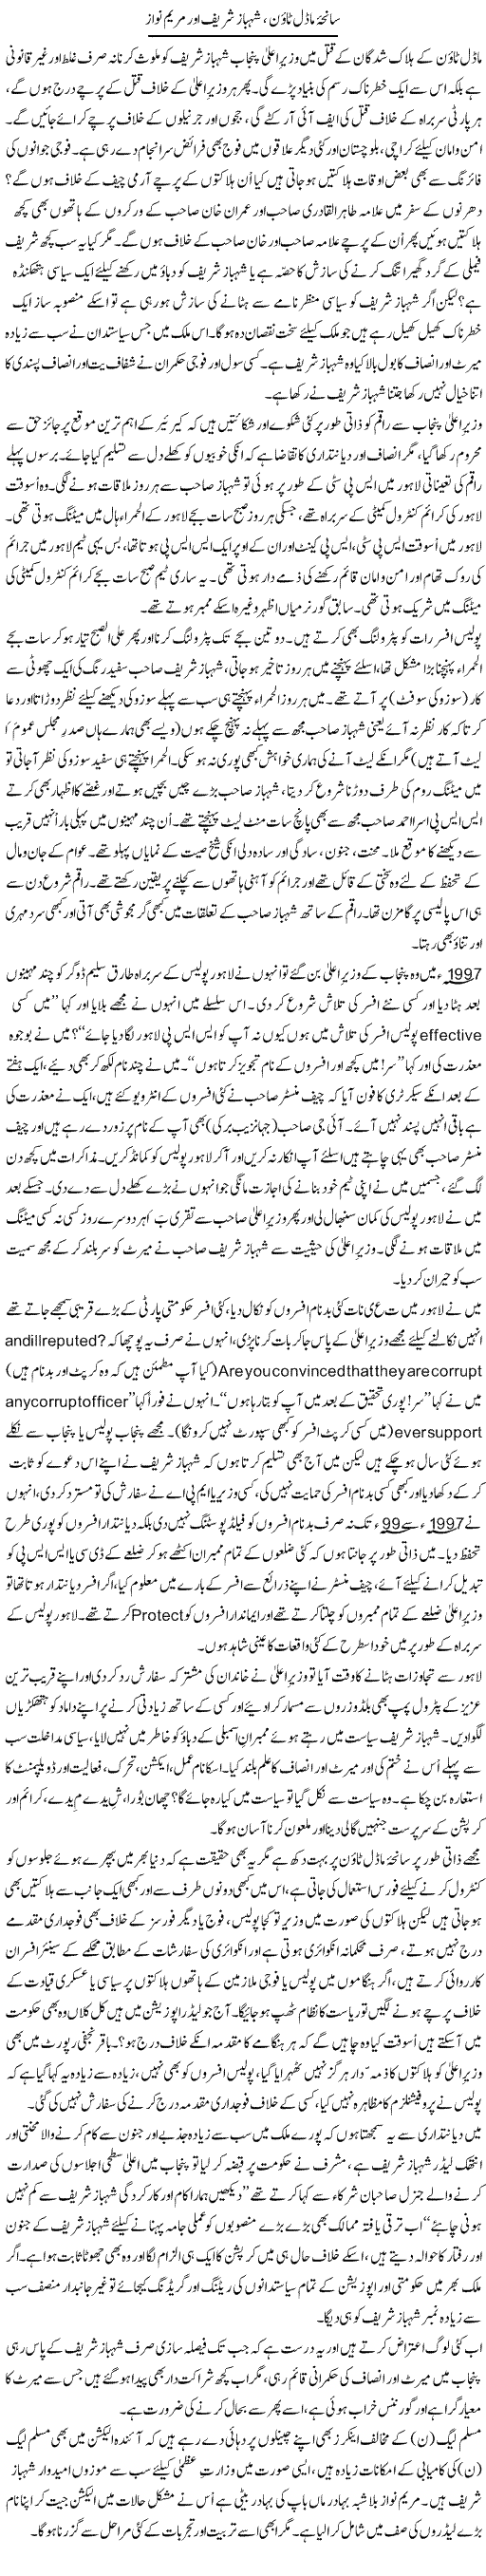 Saneha Model Town, Shahbaz Shareef Aur Maryam Nawaz | Zulfiqar Ahmed Cheema | Daily Urdu Columns